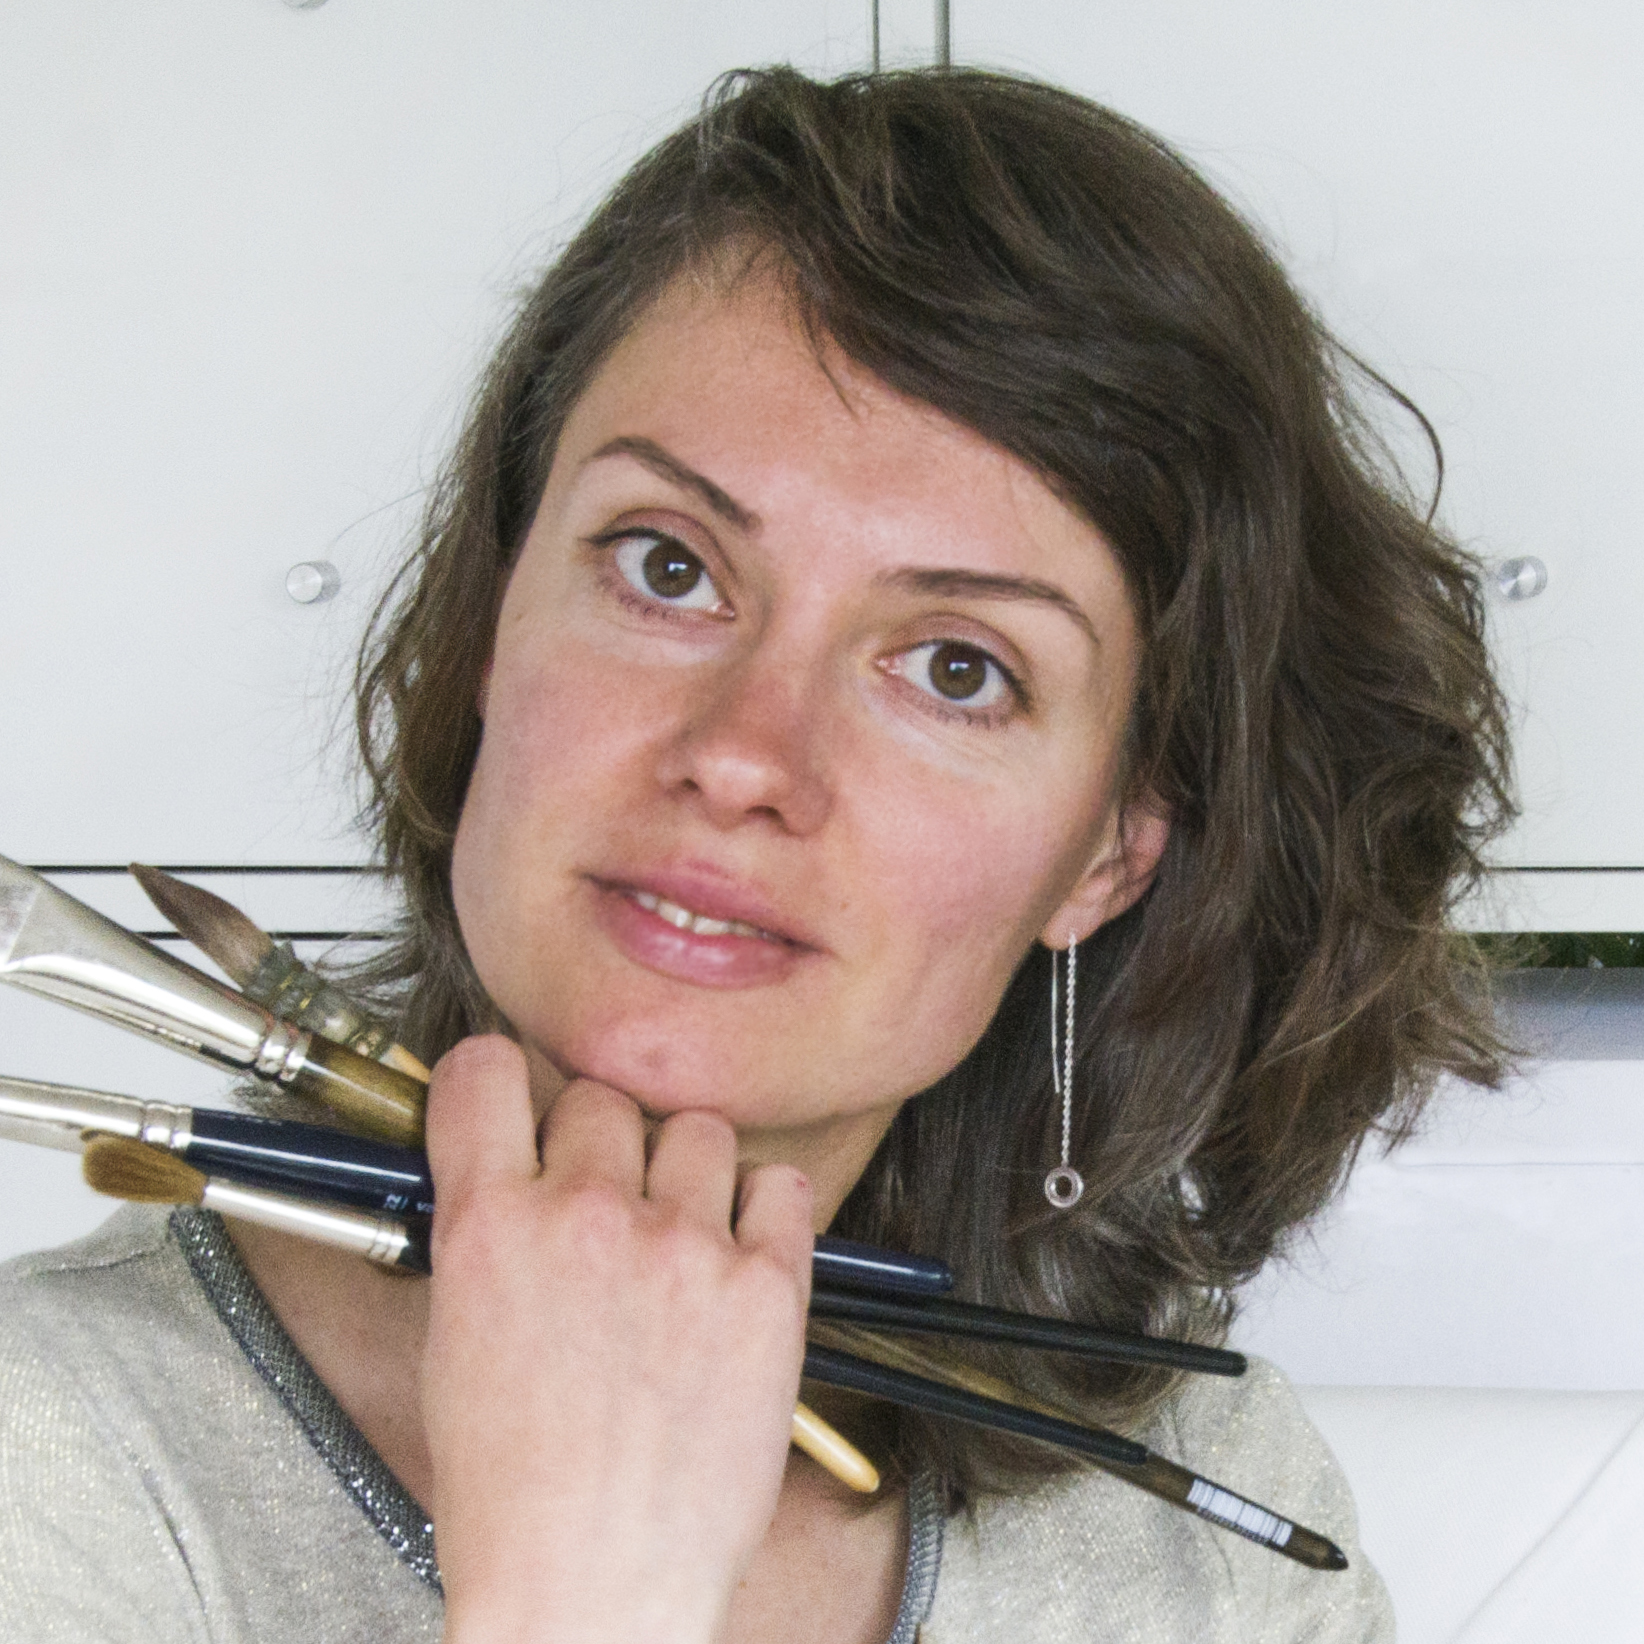 Evgenia holding a brush